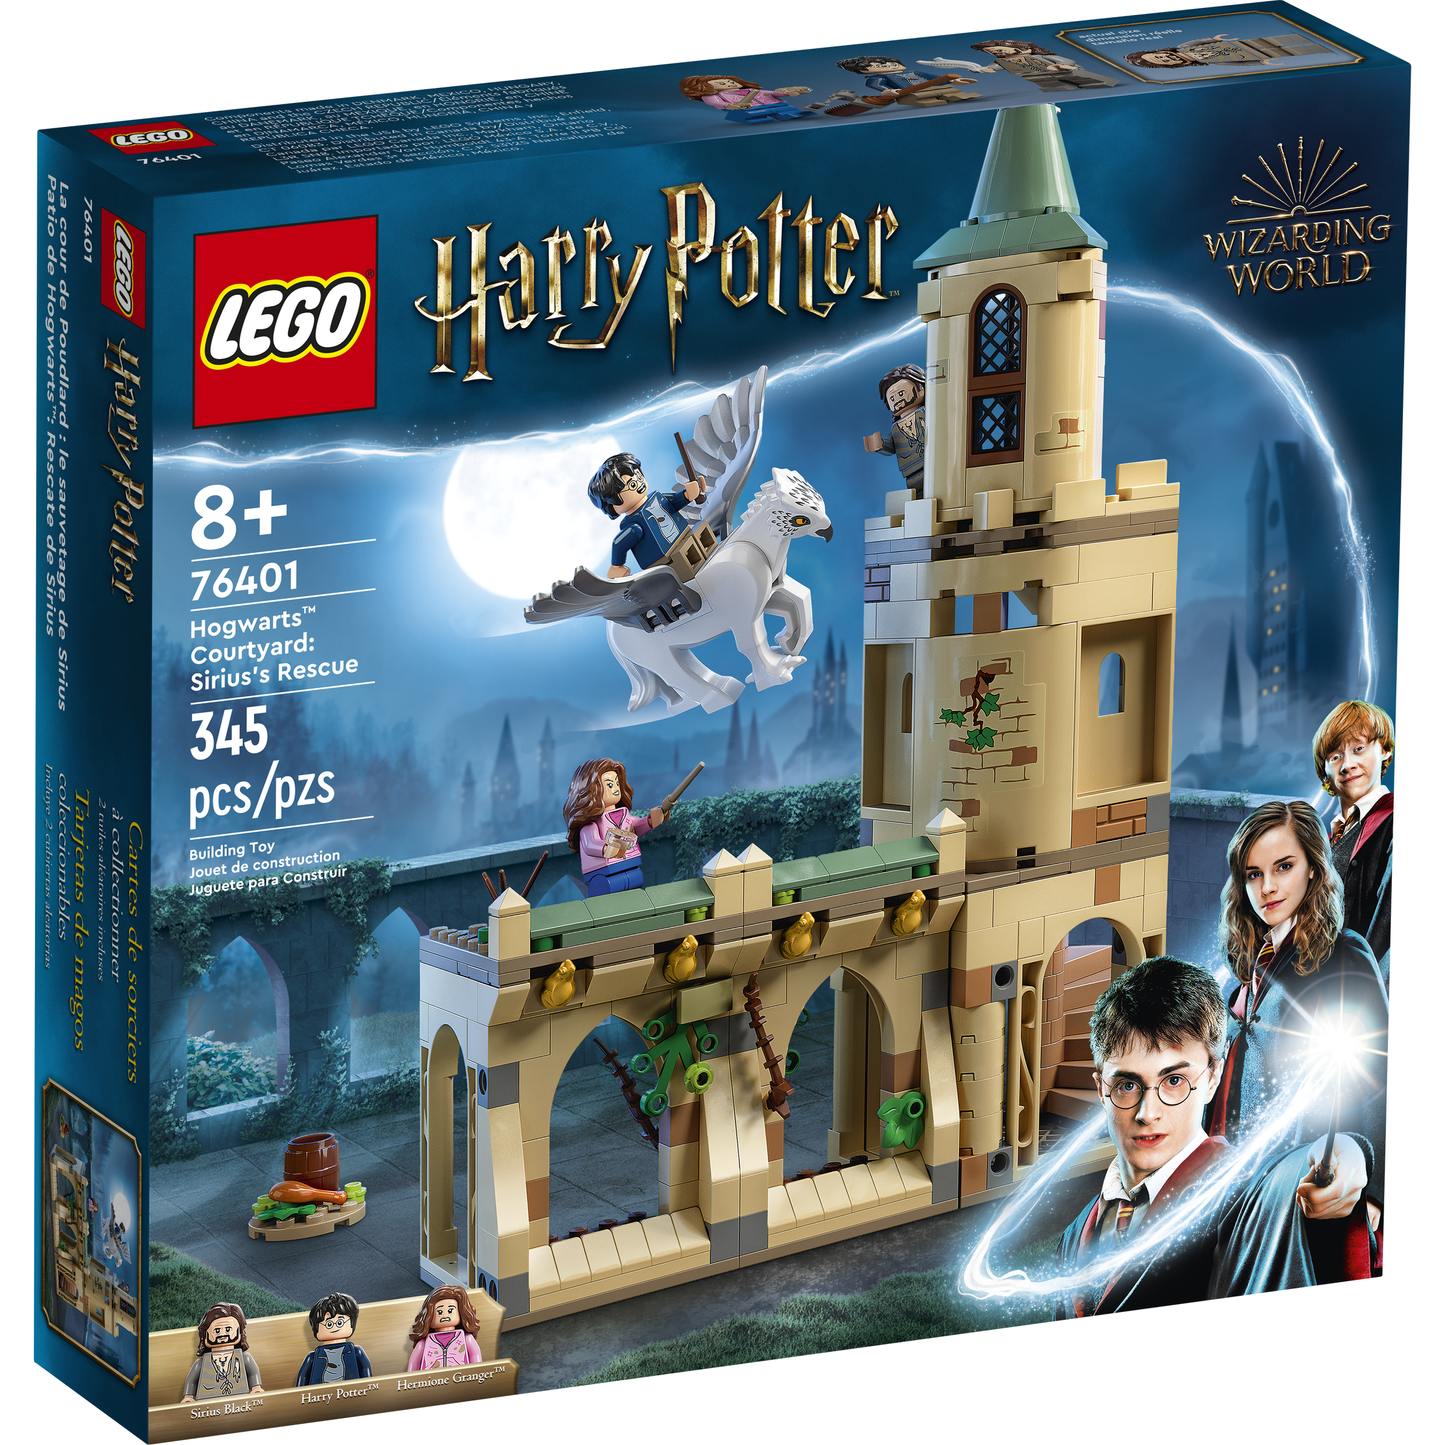 Lego Harry Potter Hogwarts Courtyard: Sirius’s Rescue 76401